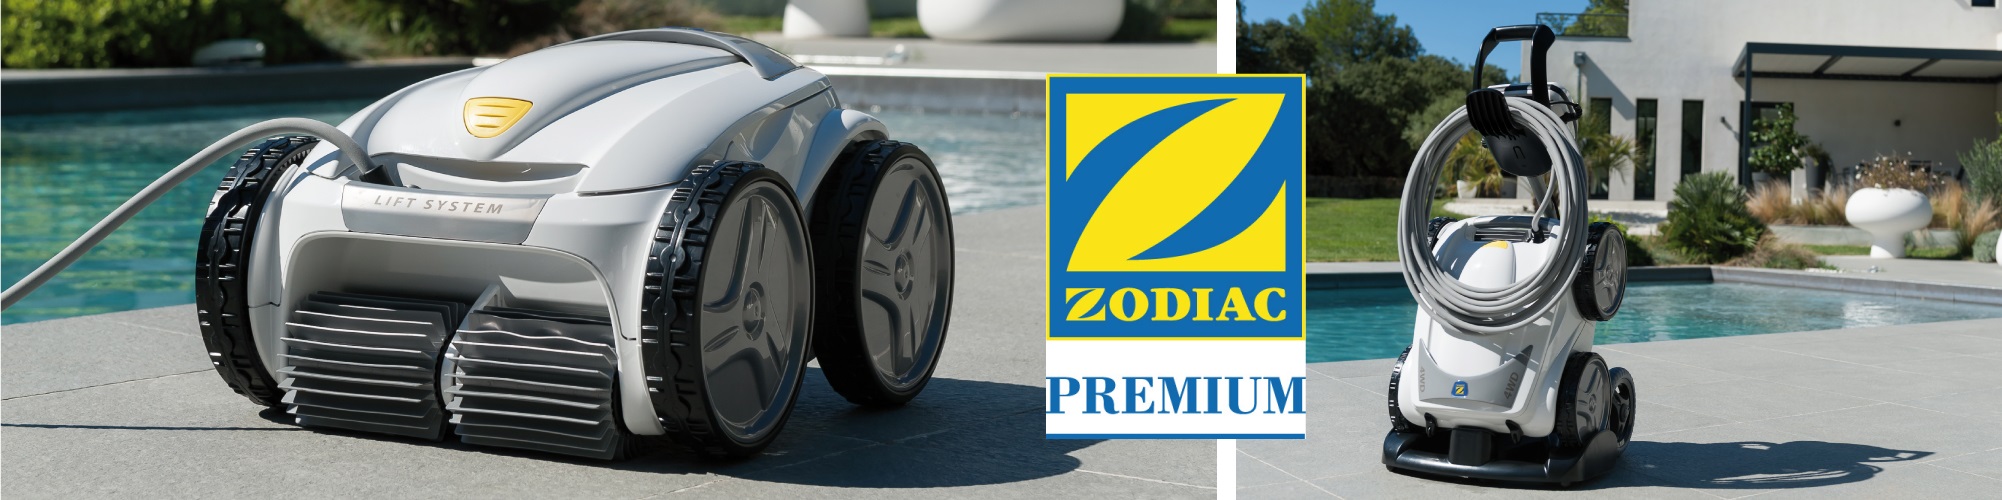 Zodiac Premium Bodensauger